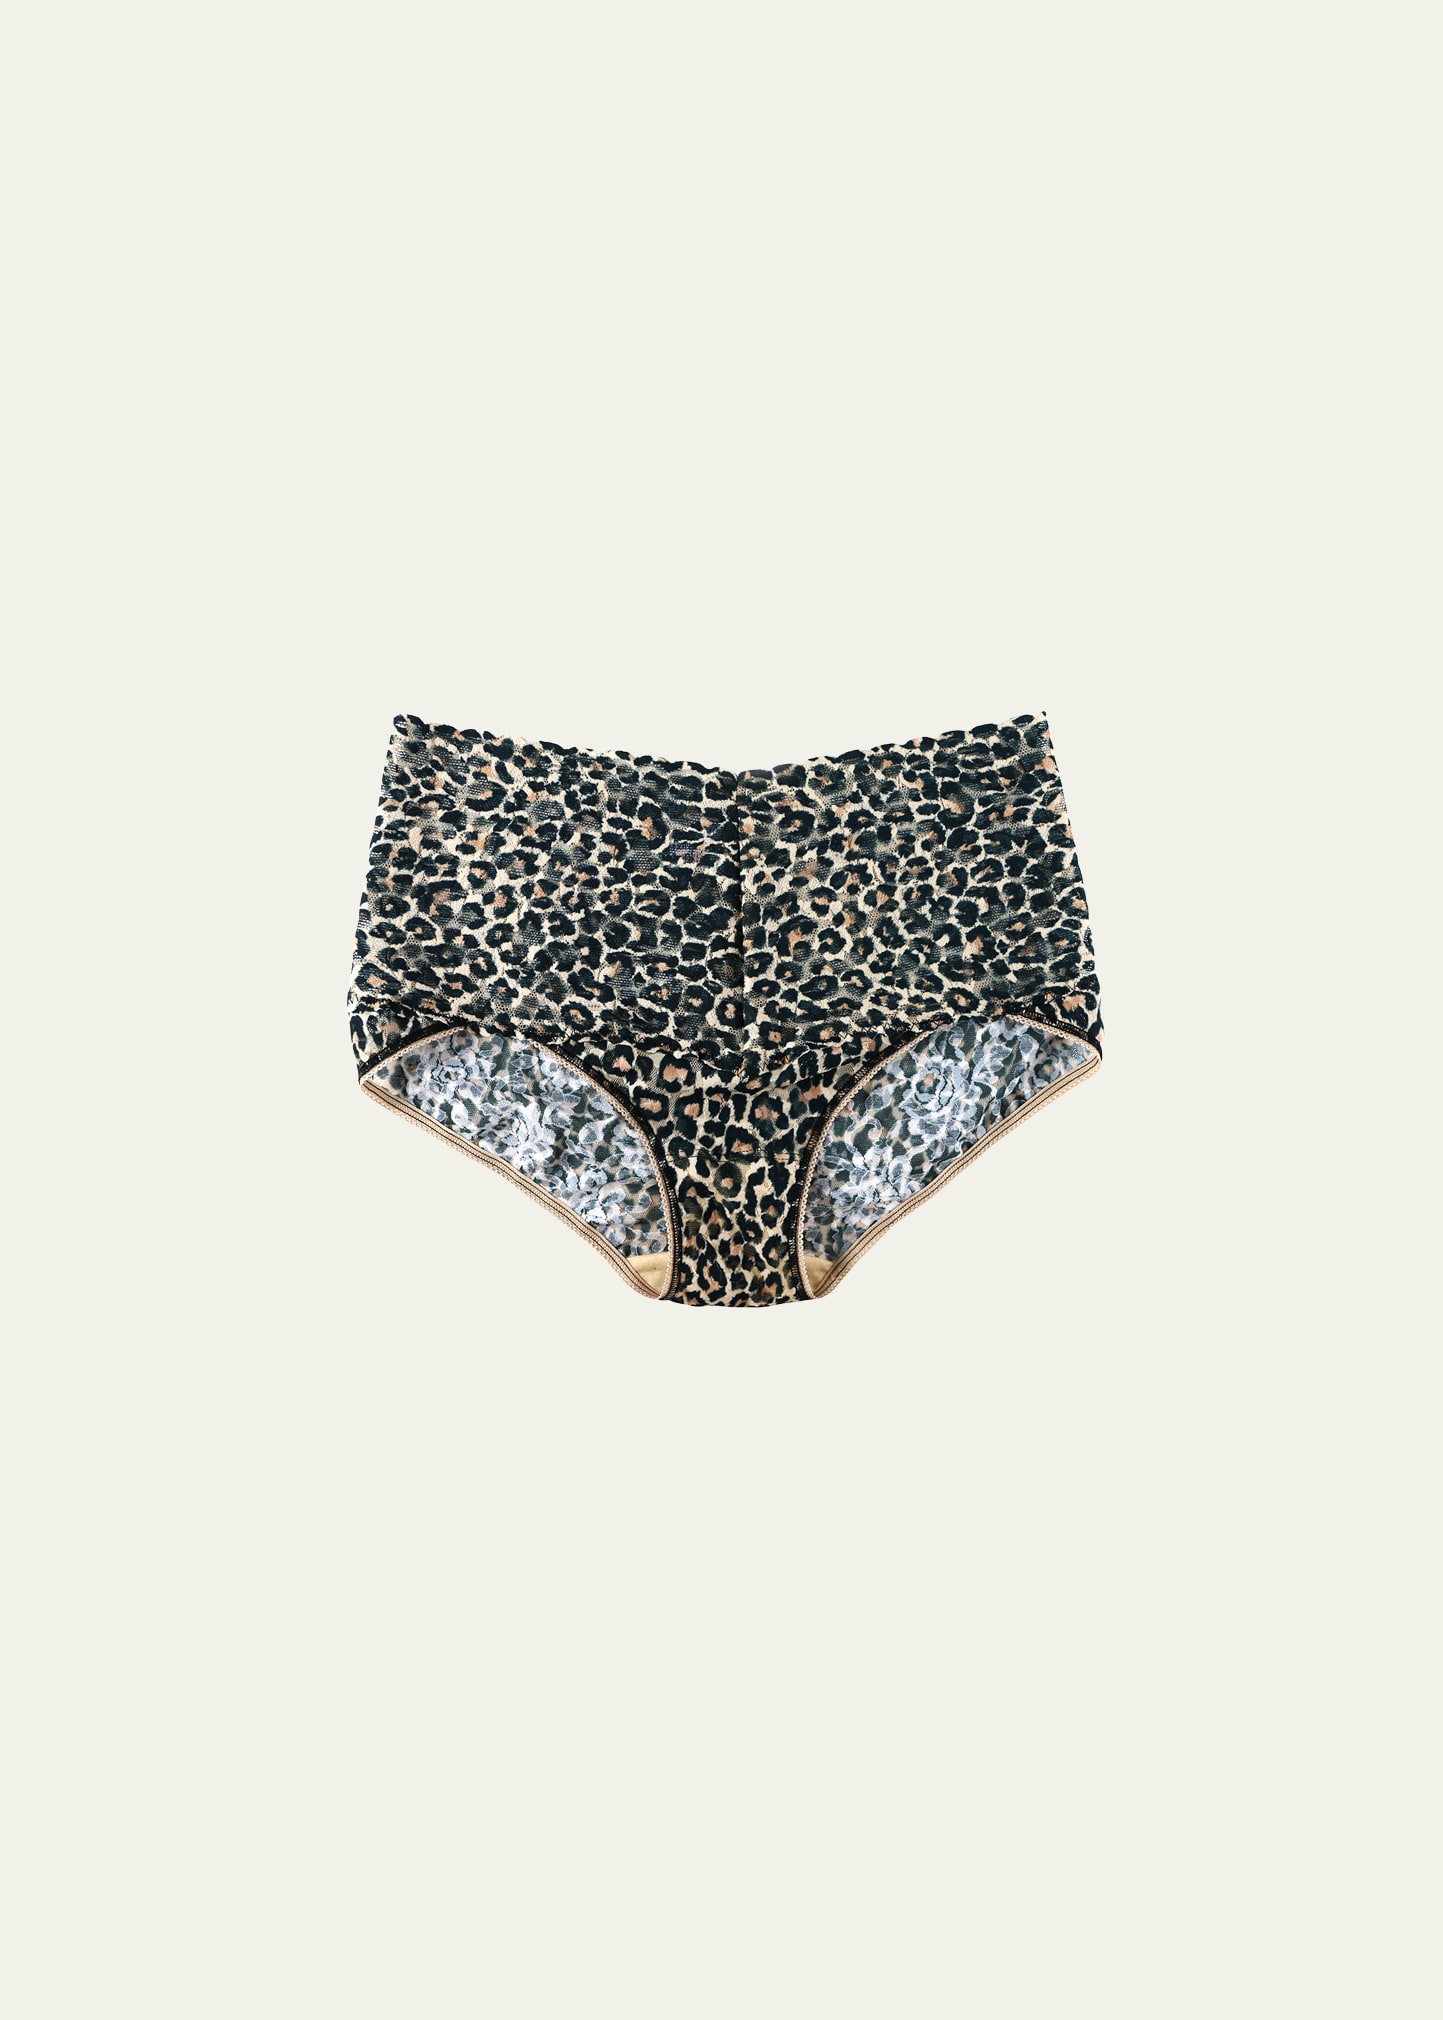 Retro Leopard-Print Lace Briefs